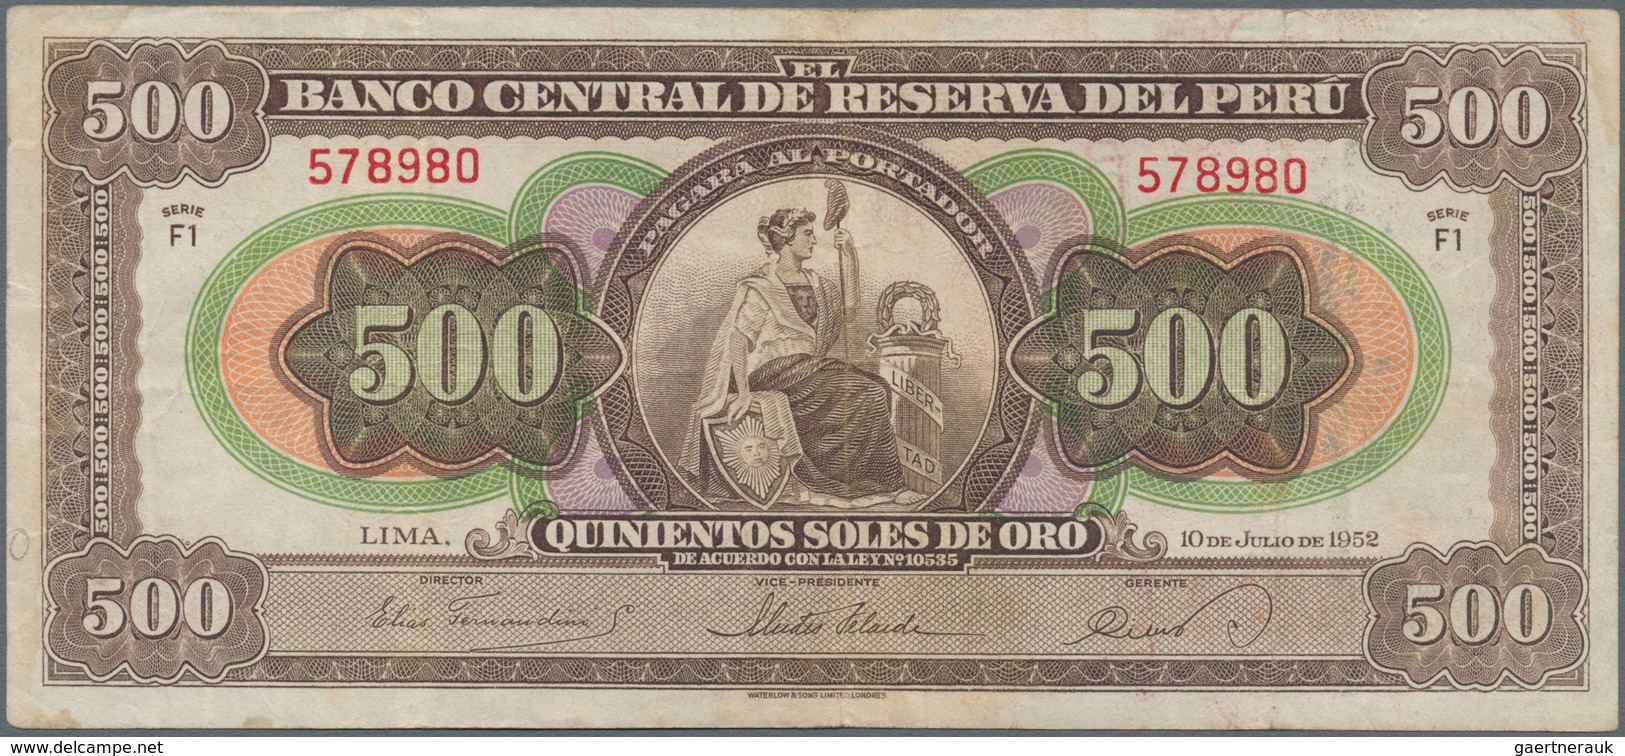 Peru: Pair With 1 Sol Republica Del Peru 1879 P.1 (VF) And 500 Soles De Oro 1952 Banco Central De Re - Perú